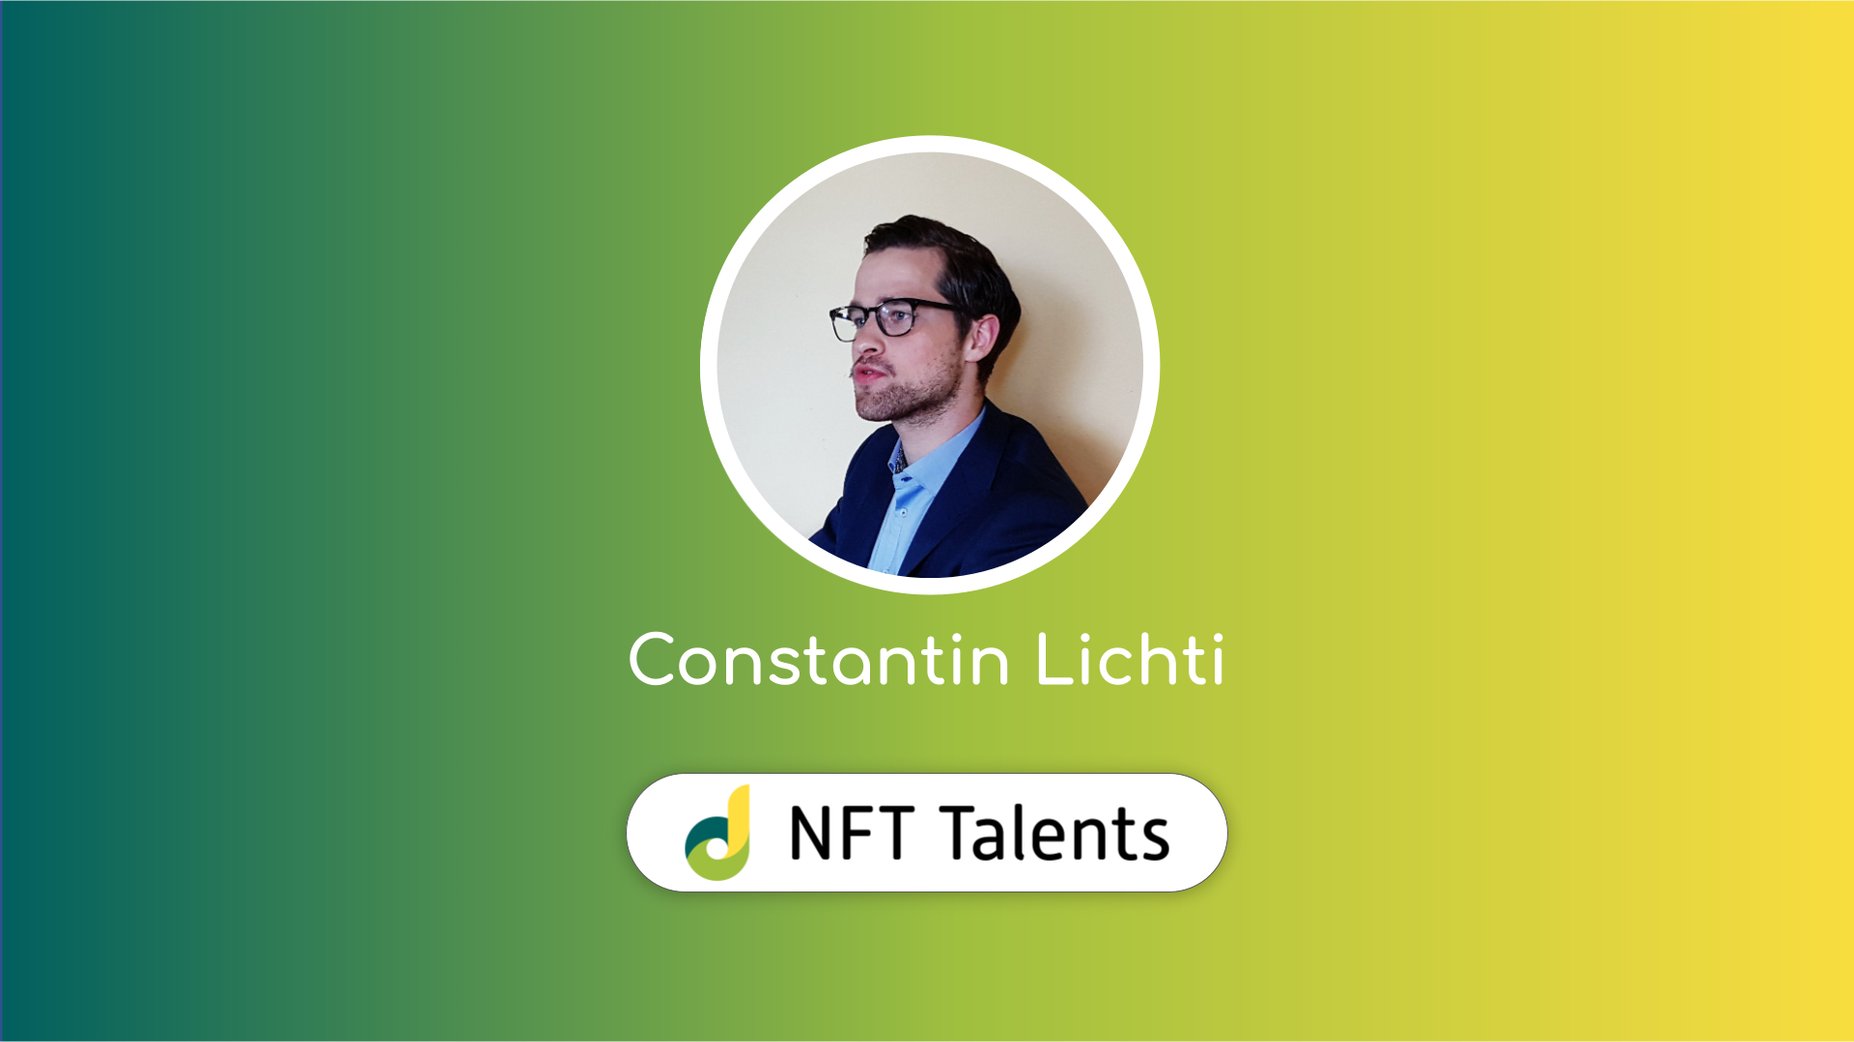 NFT Talents Mentor – Constantin Lichti